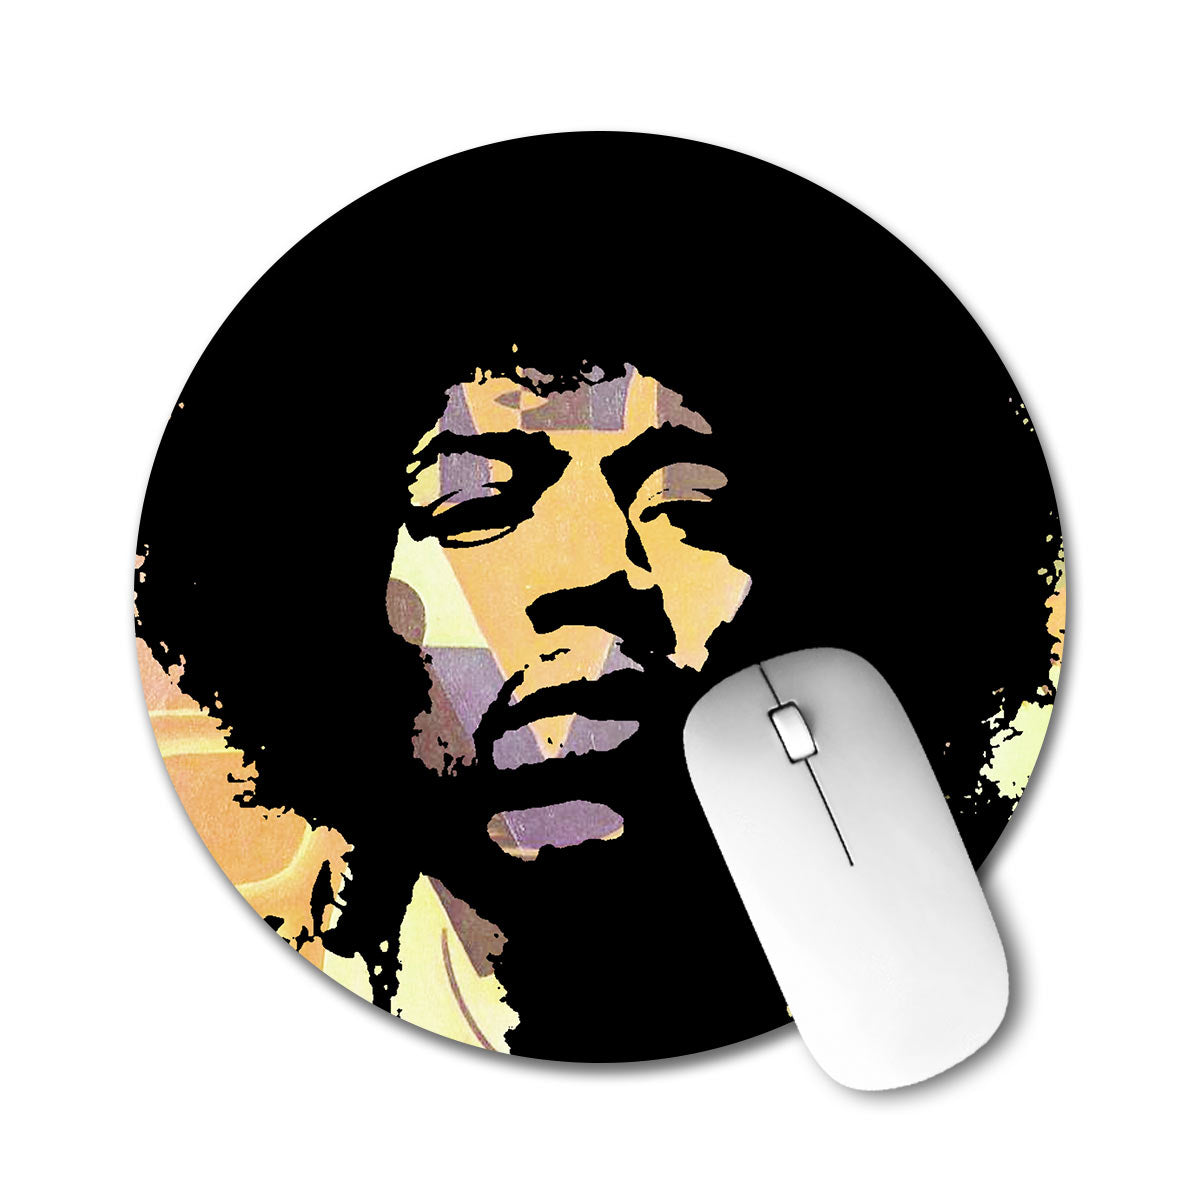 Jimi Hendrix Mousepad